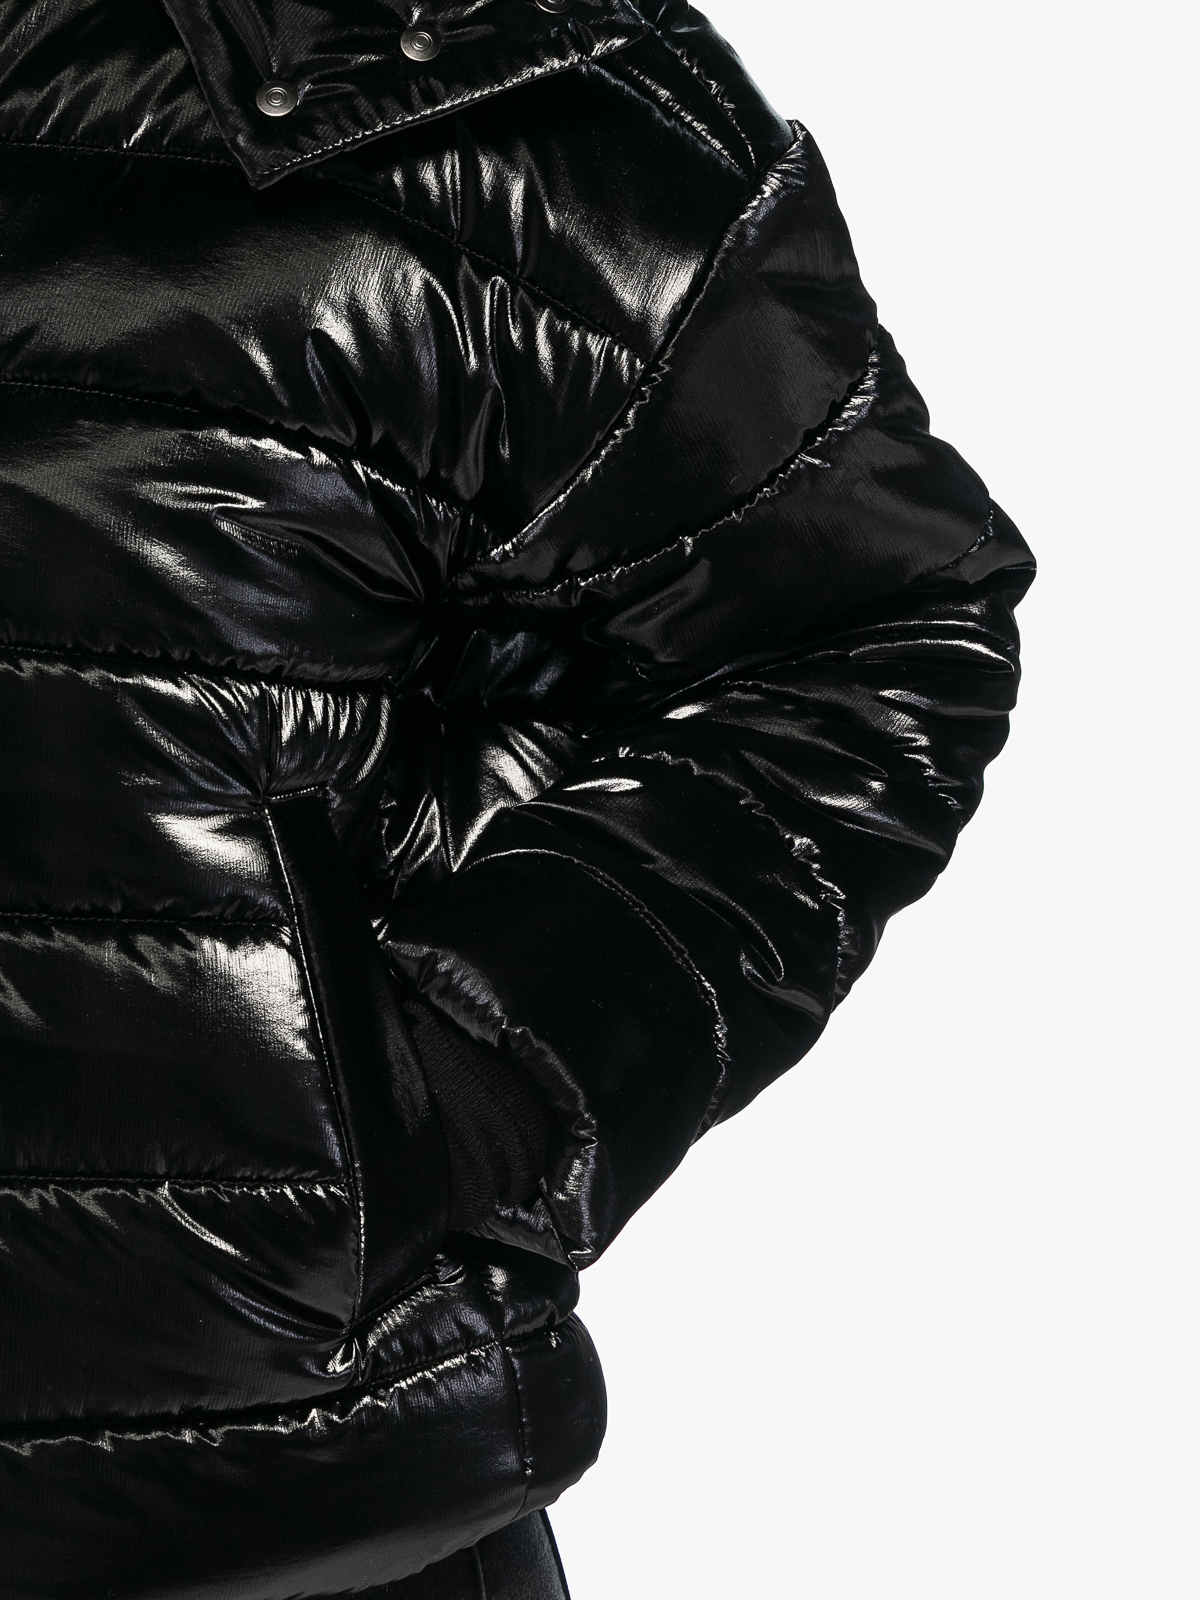 Куртка женская стеганая Michelle черная блестящая | Фото №18